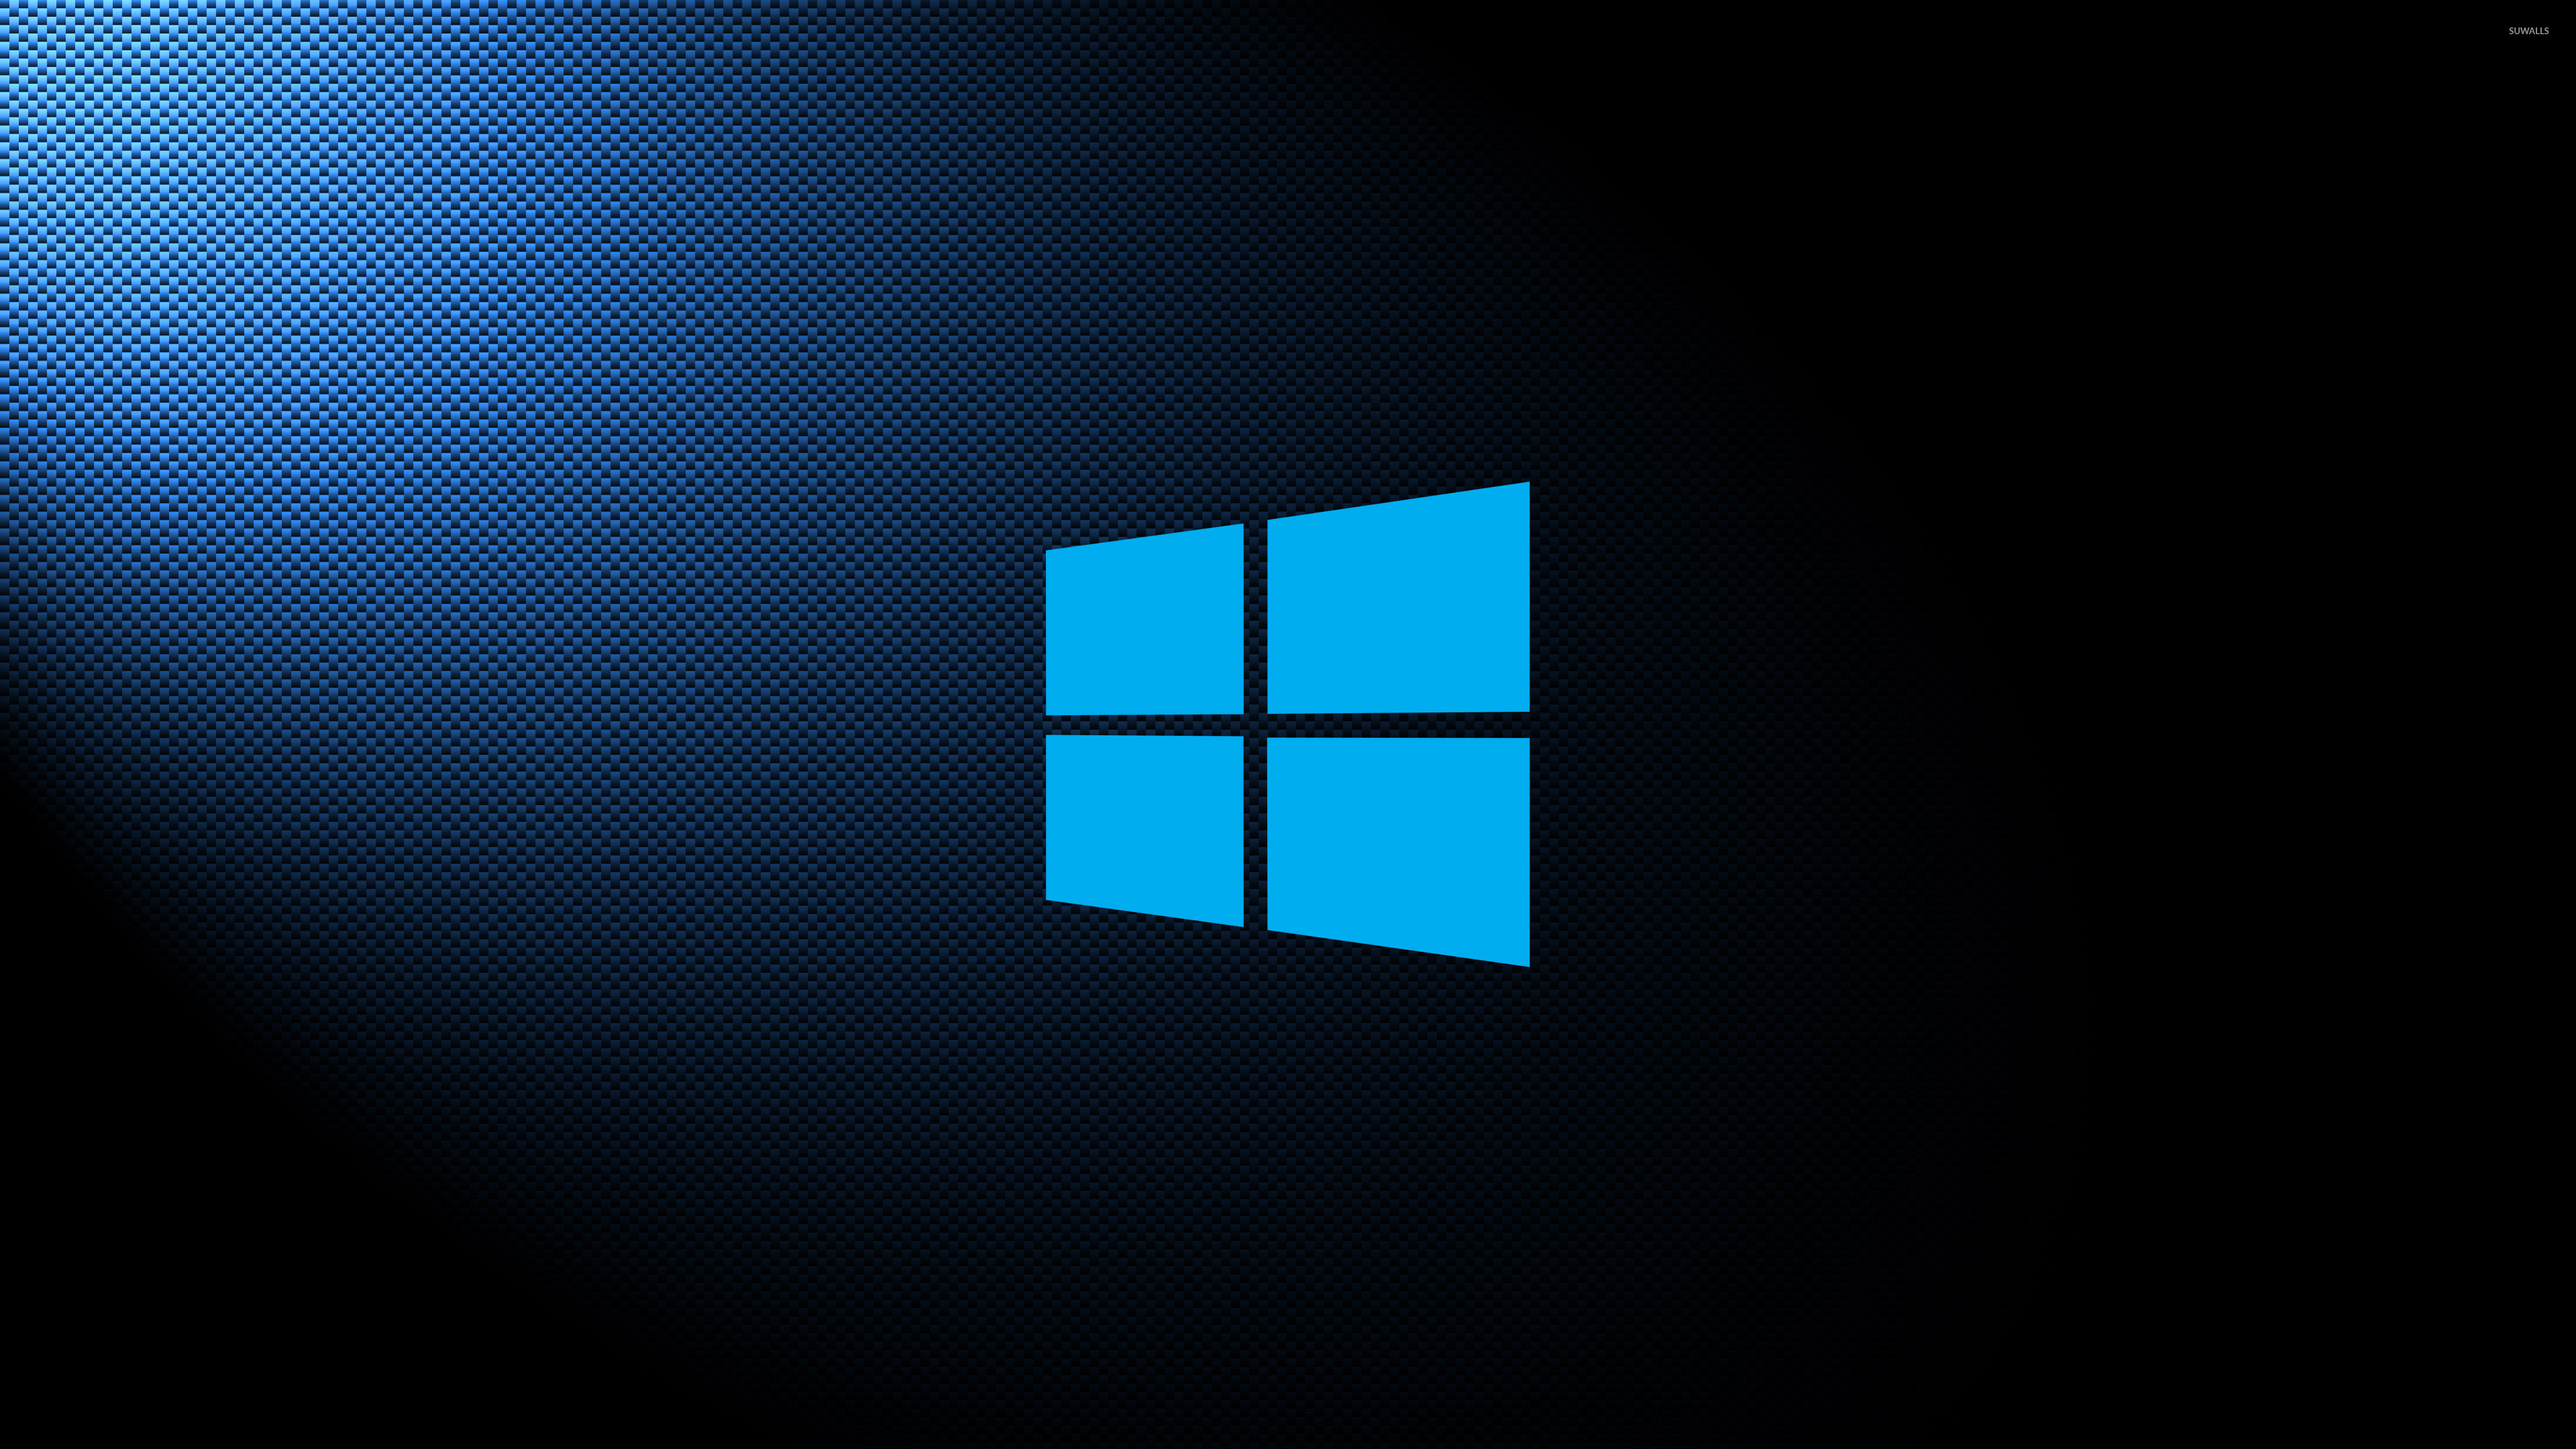 3840x2160 Windows 10 simple blue logo on carbon fiber wallpaper  jpg